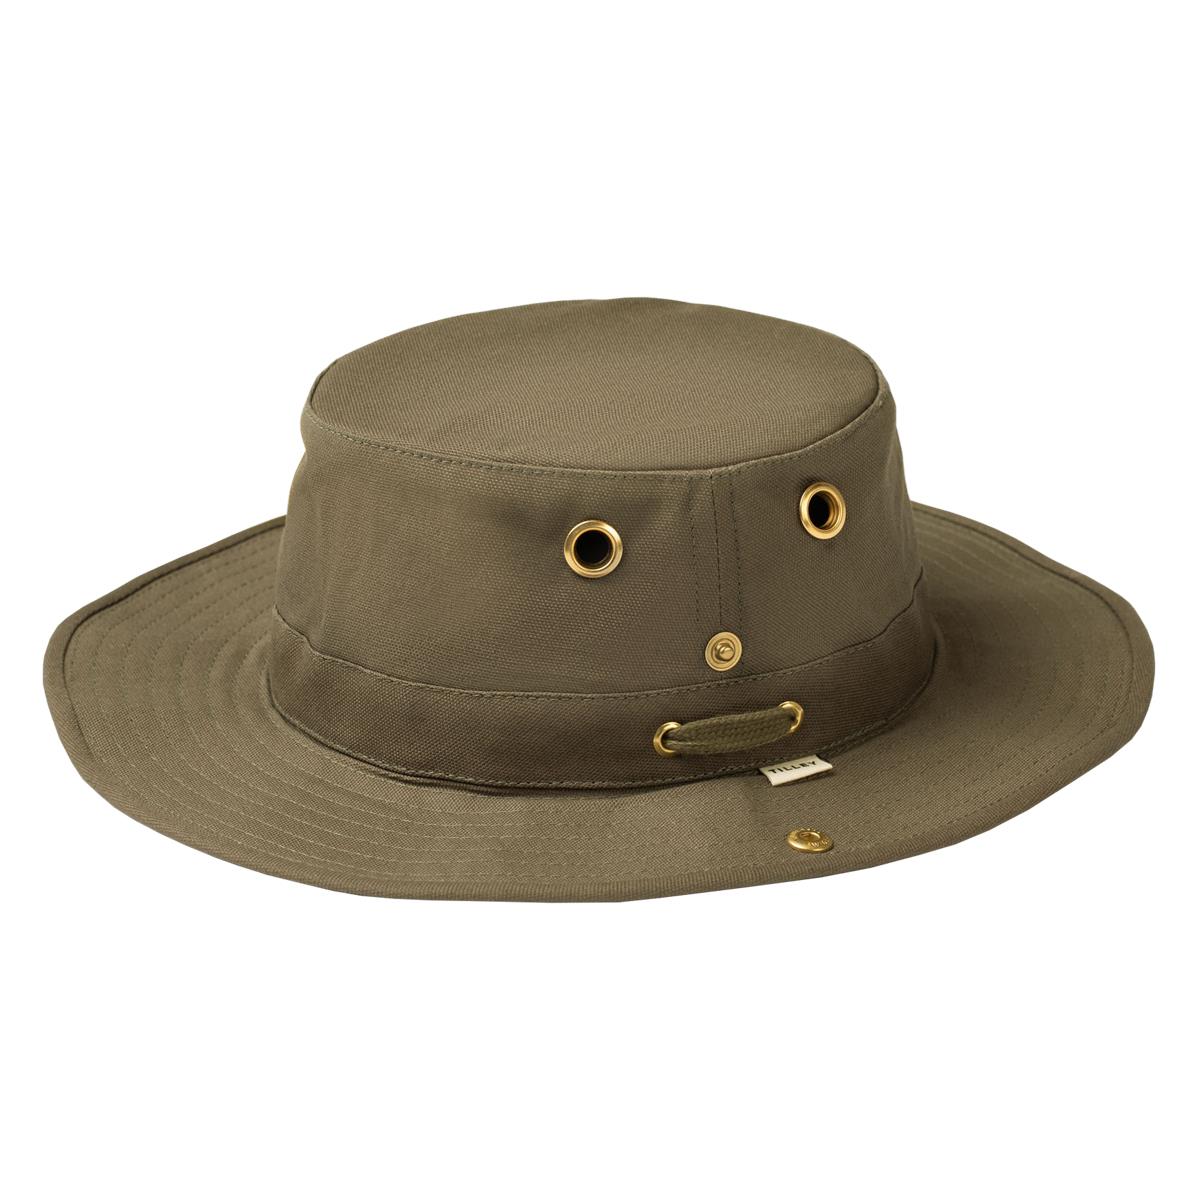 What exactly is hemp in the Tilley Unisex TH5 Medium Brim Hemp Hat?